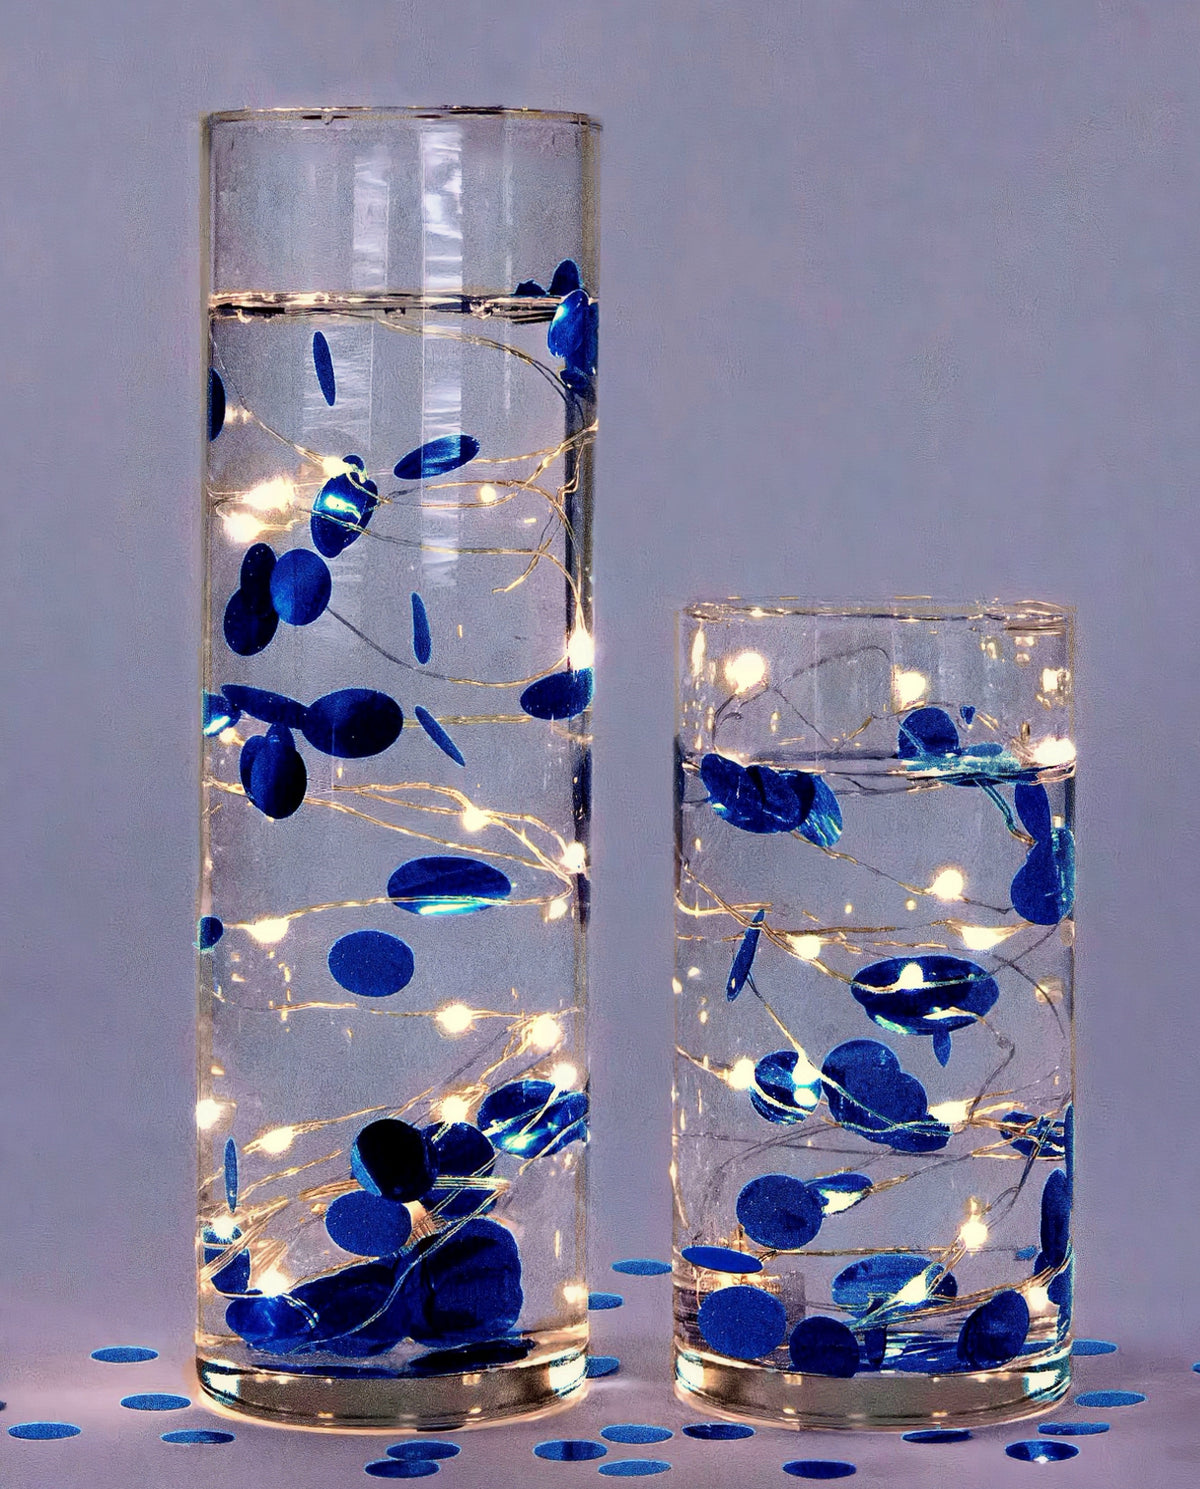 Transparent Water Gels Premeasured Kits-Each 1 Pkt Fills 1 GL of